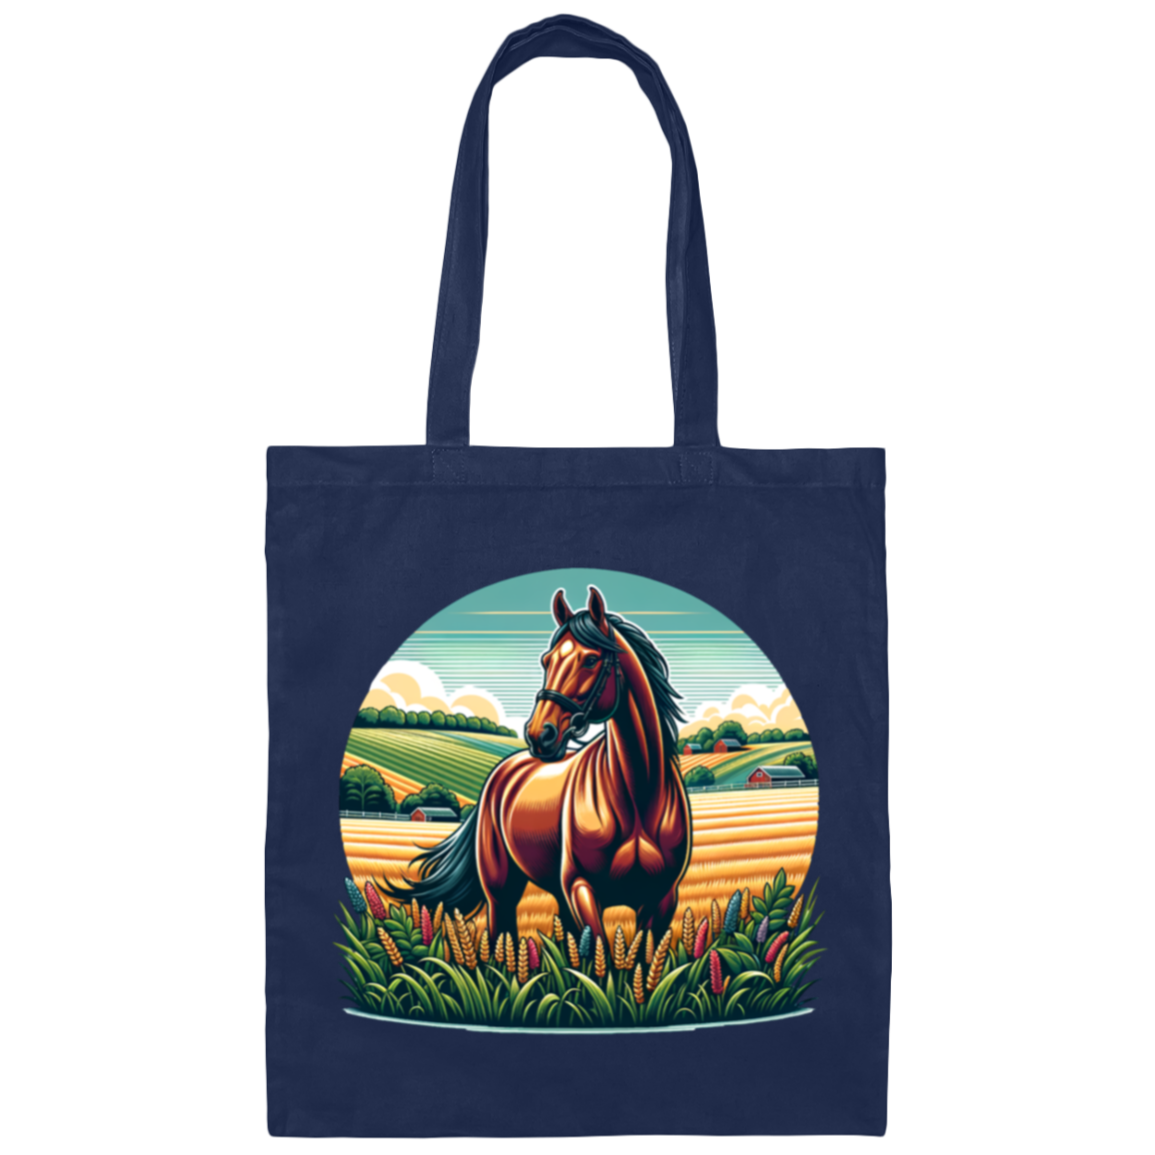 Bay Horse on Farm - Canvas Tote Bag